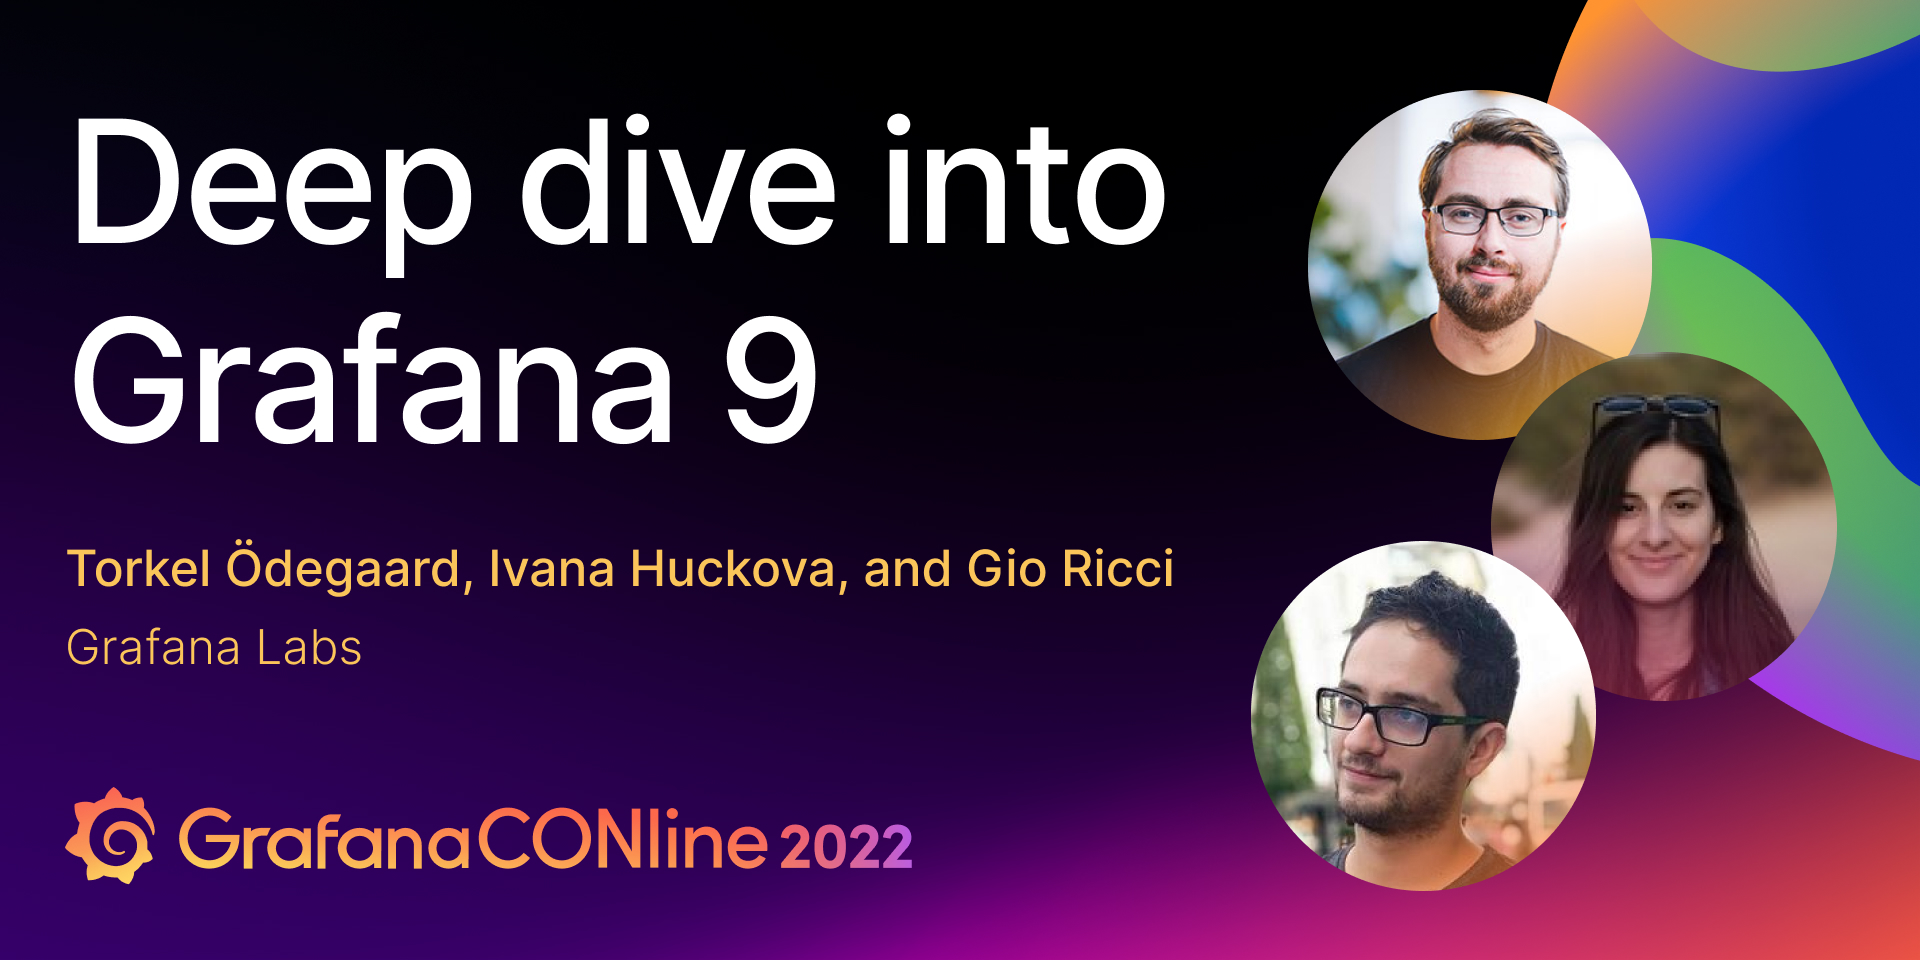 GrafanaCONline 2022 Deep dive into Grafana 9.0 information